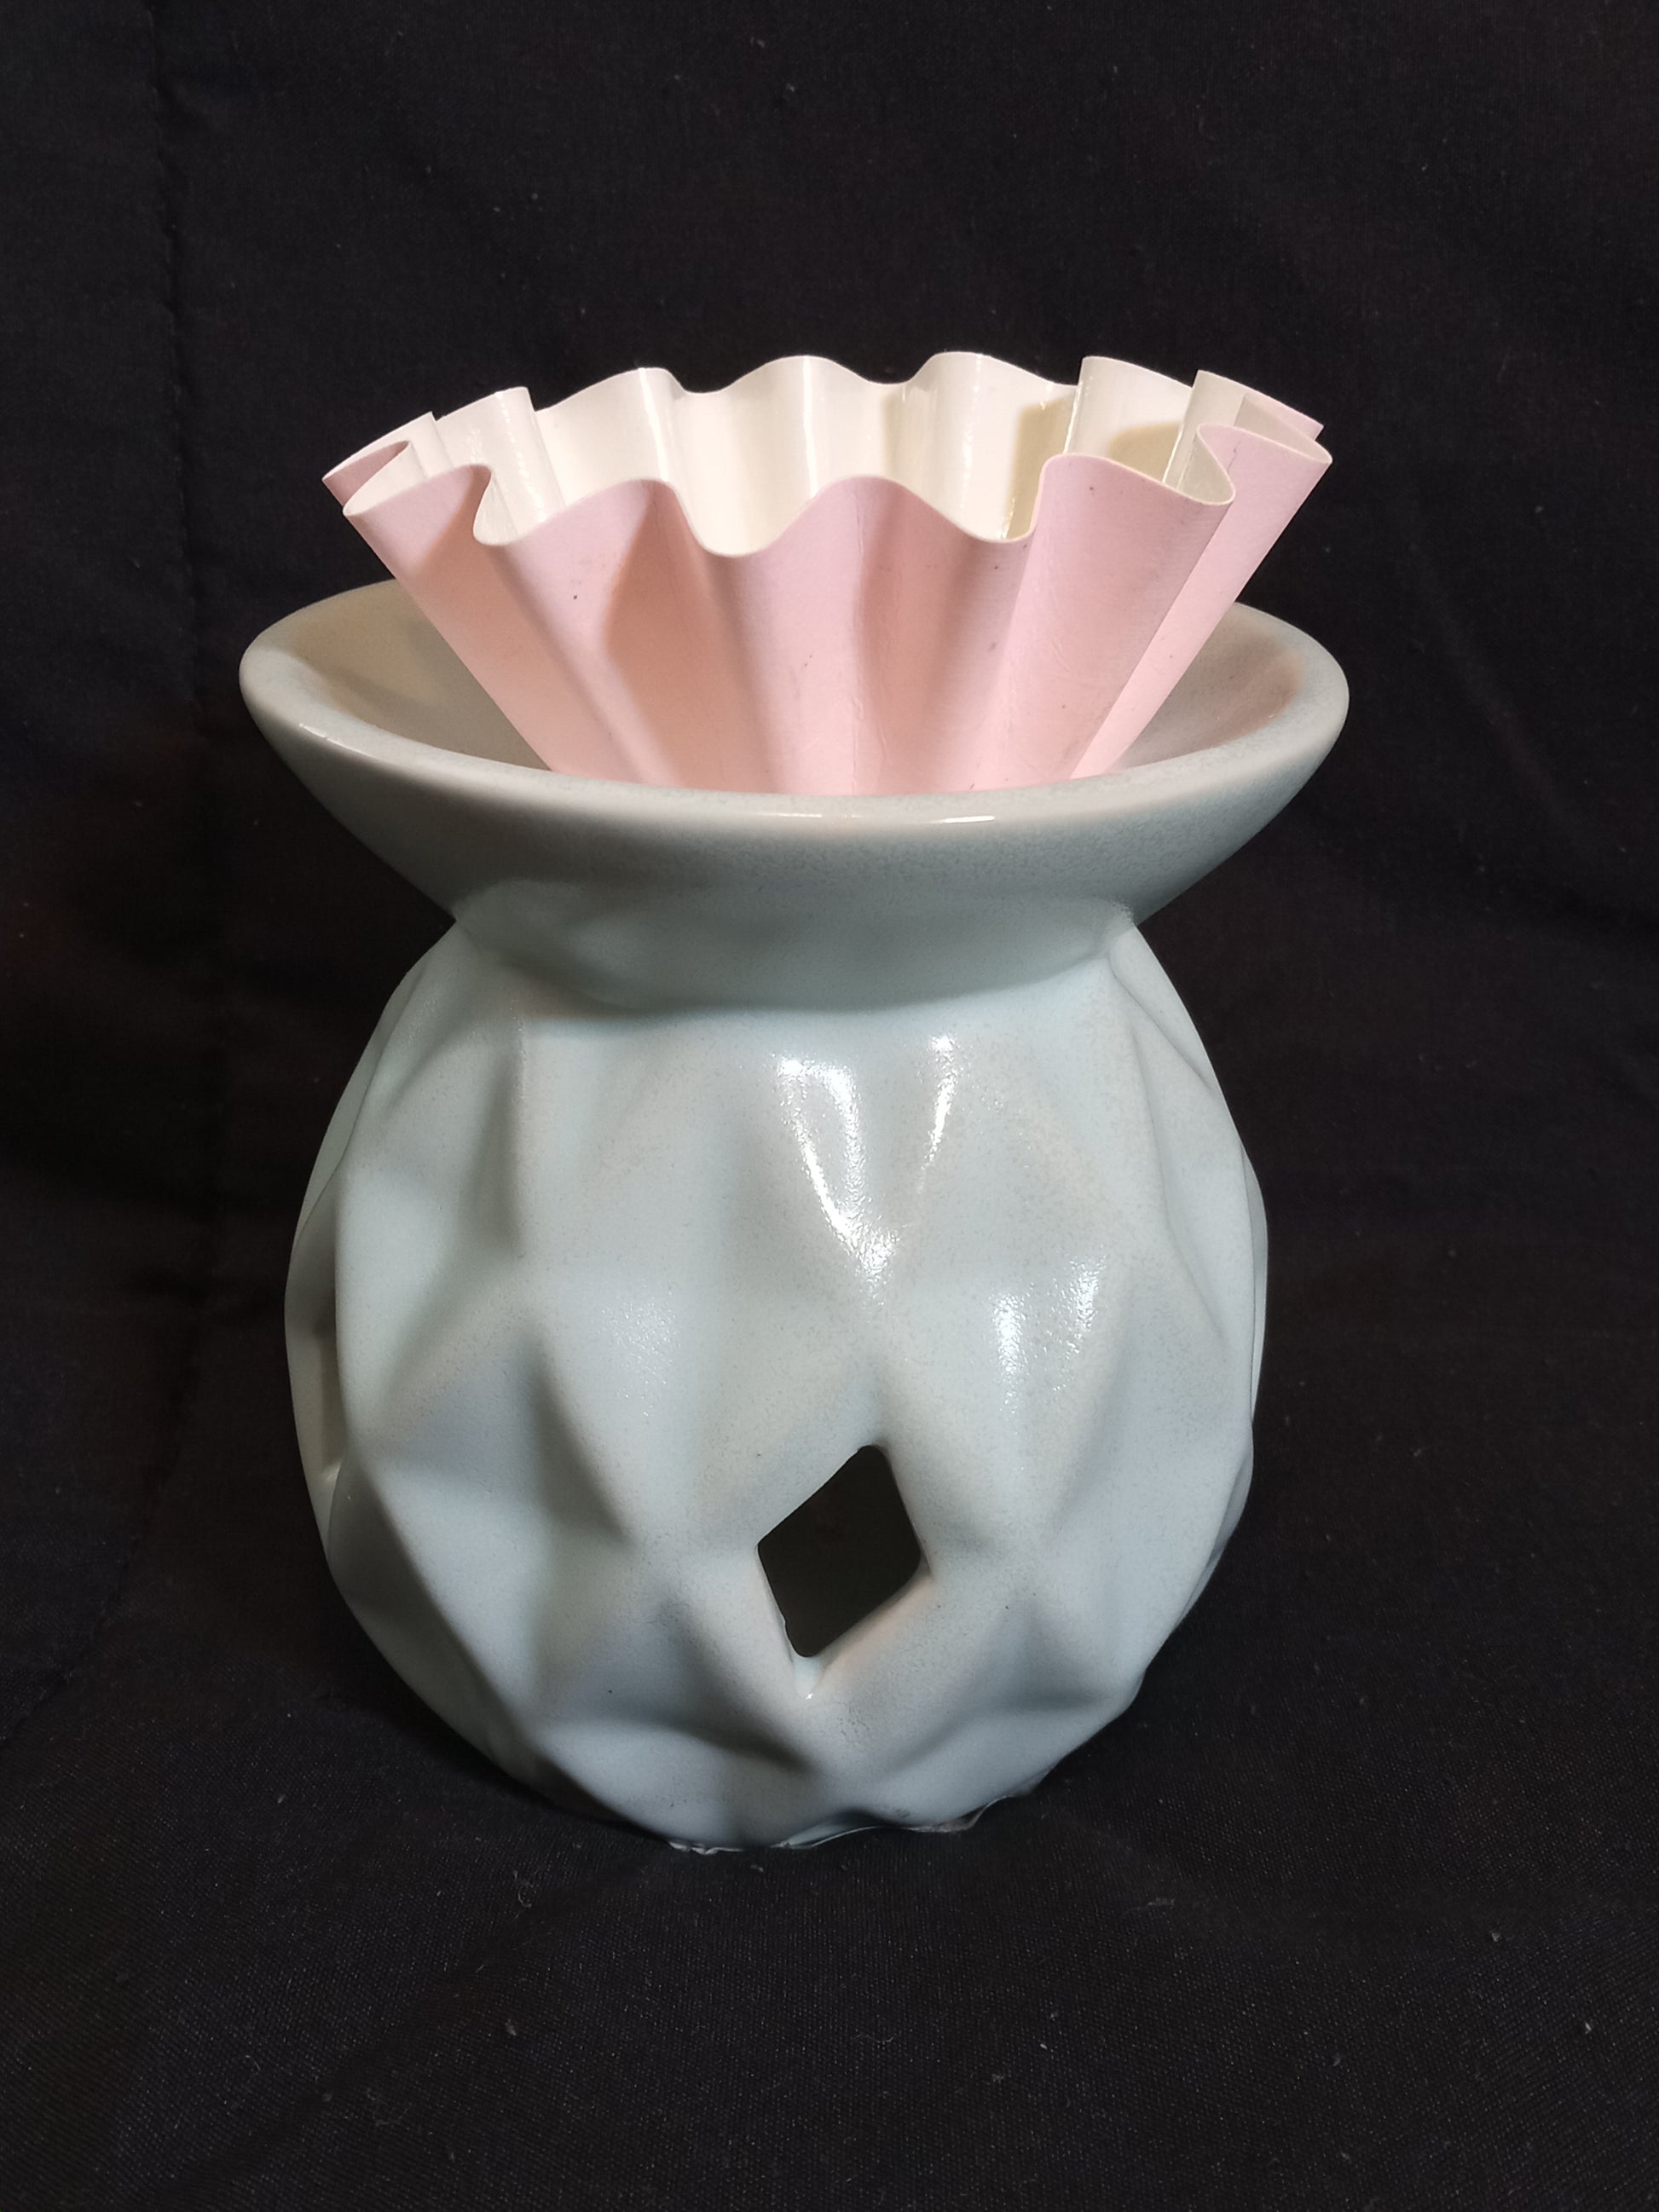 Ceramic Wax Melter Gift Set